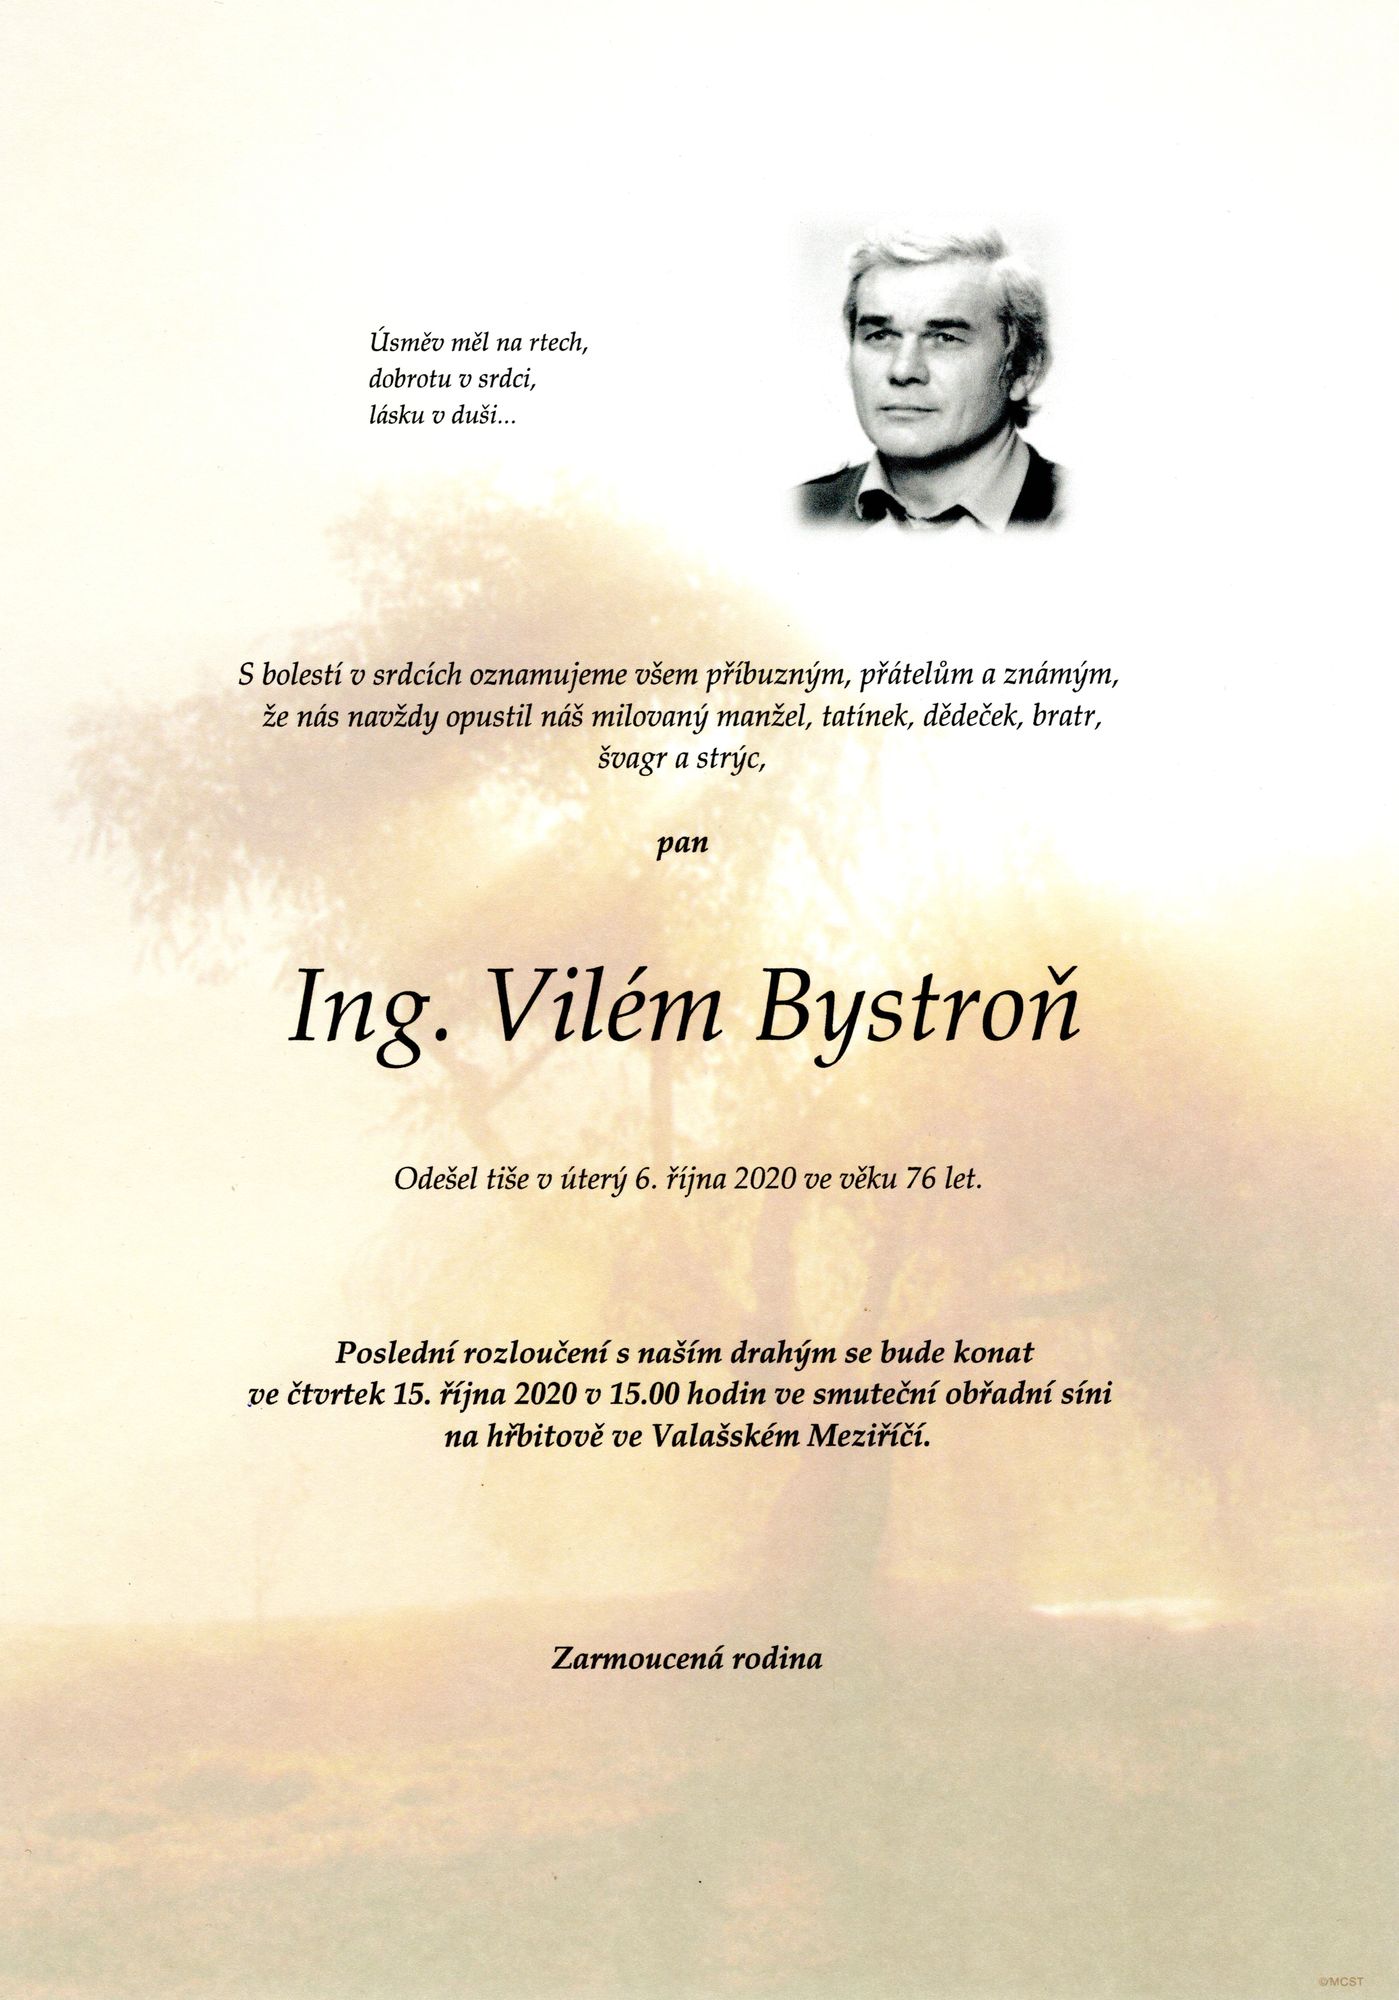 Ing. Vilém Bystroň